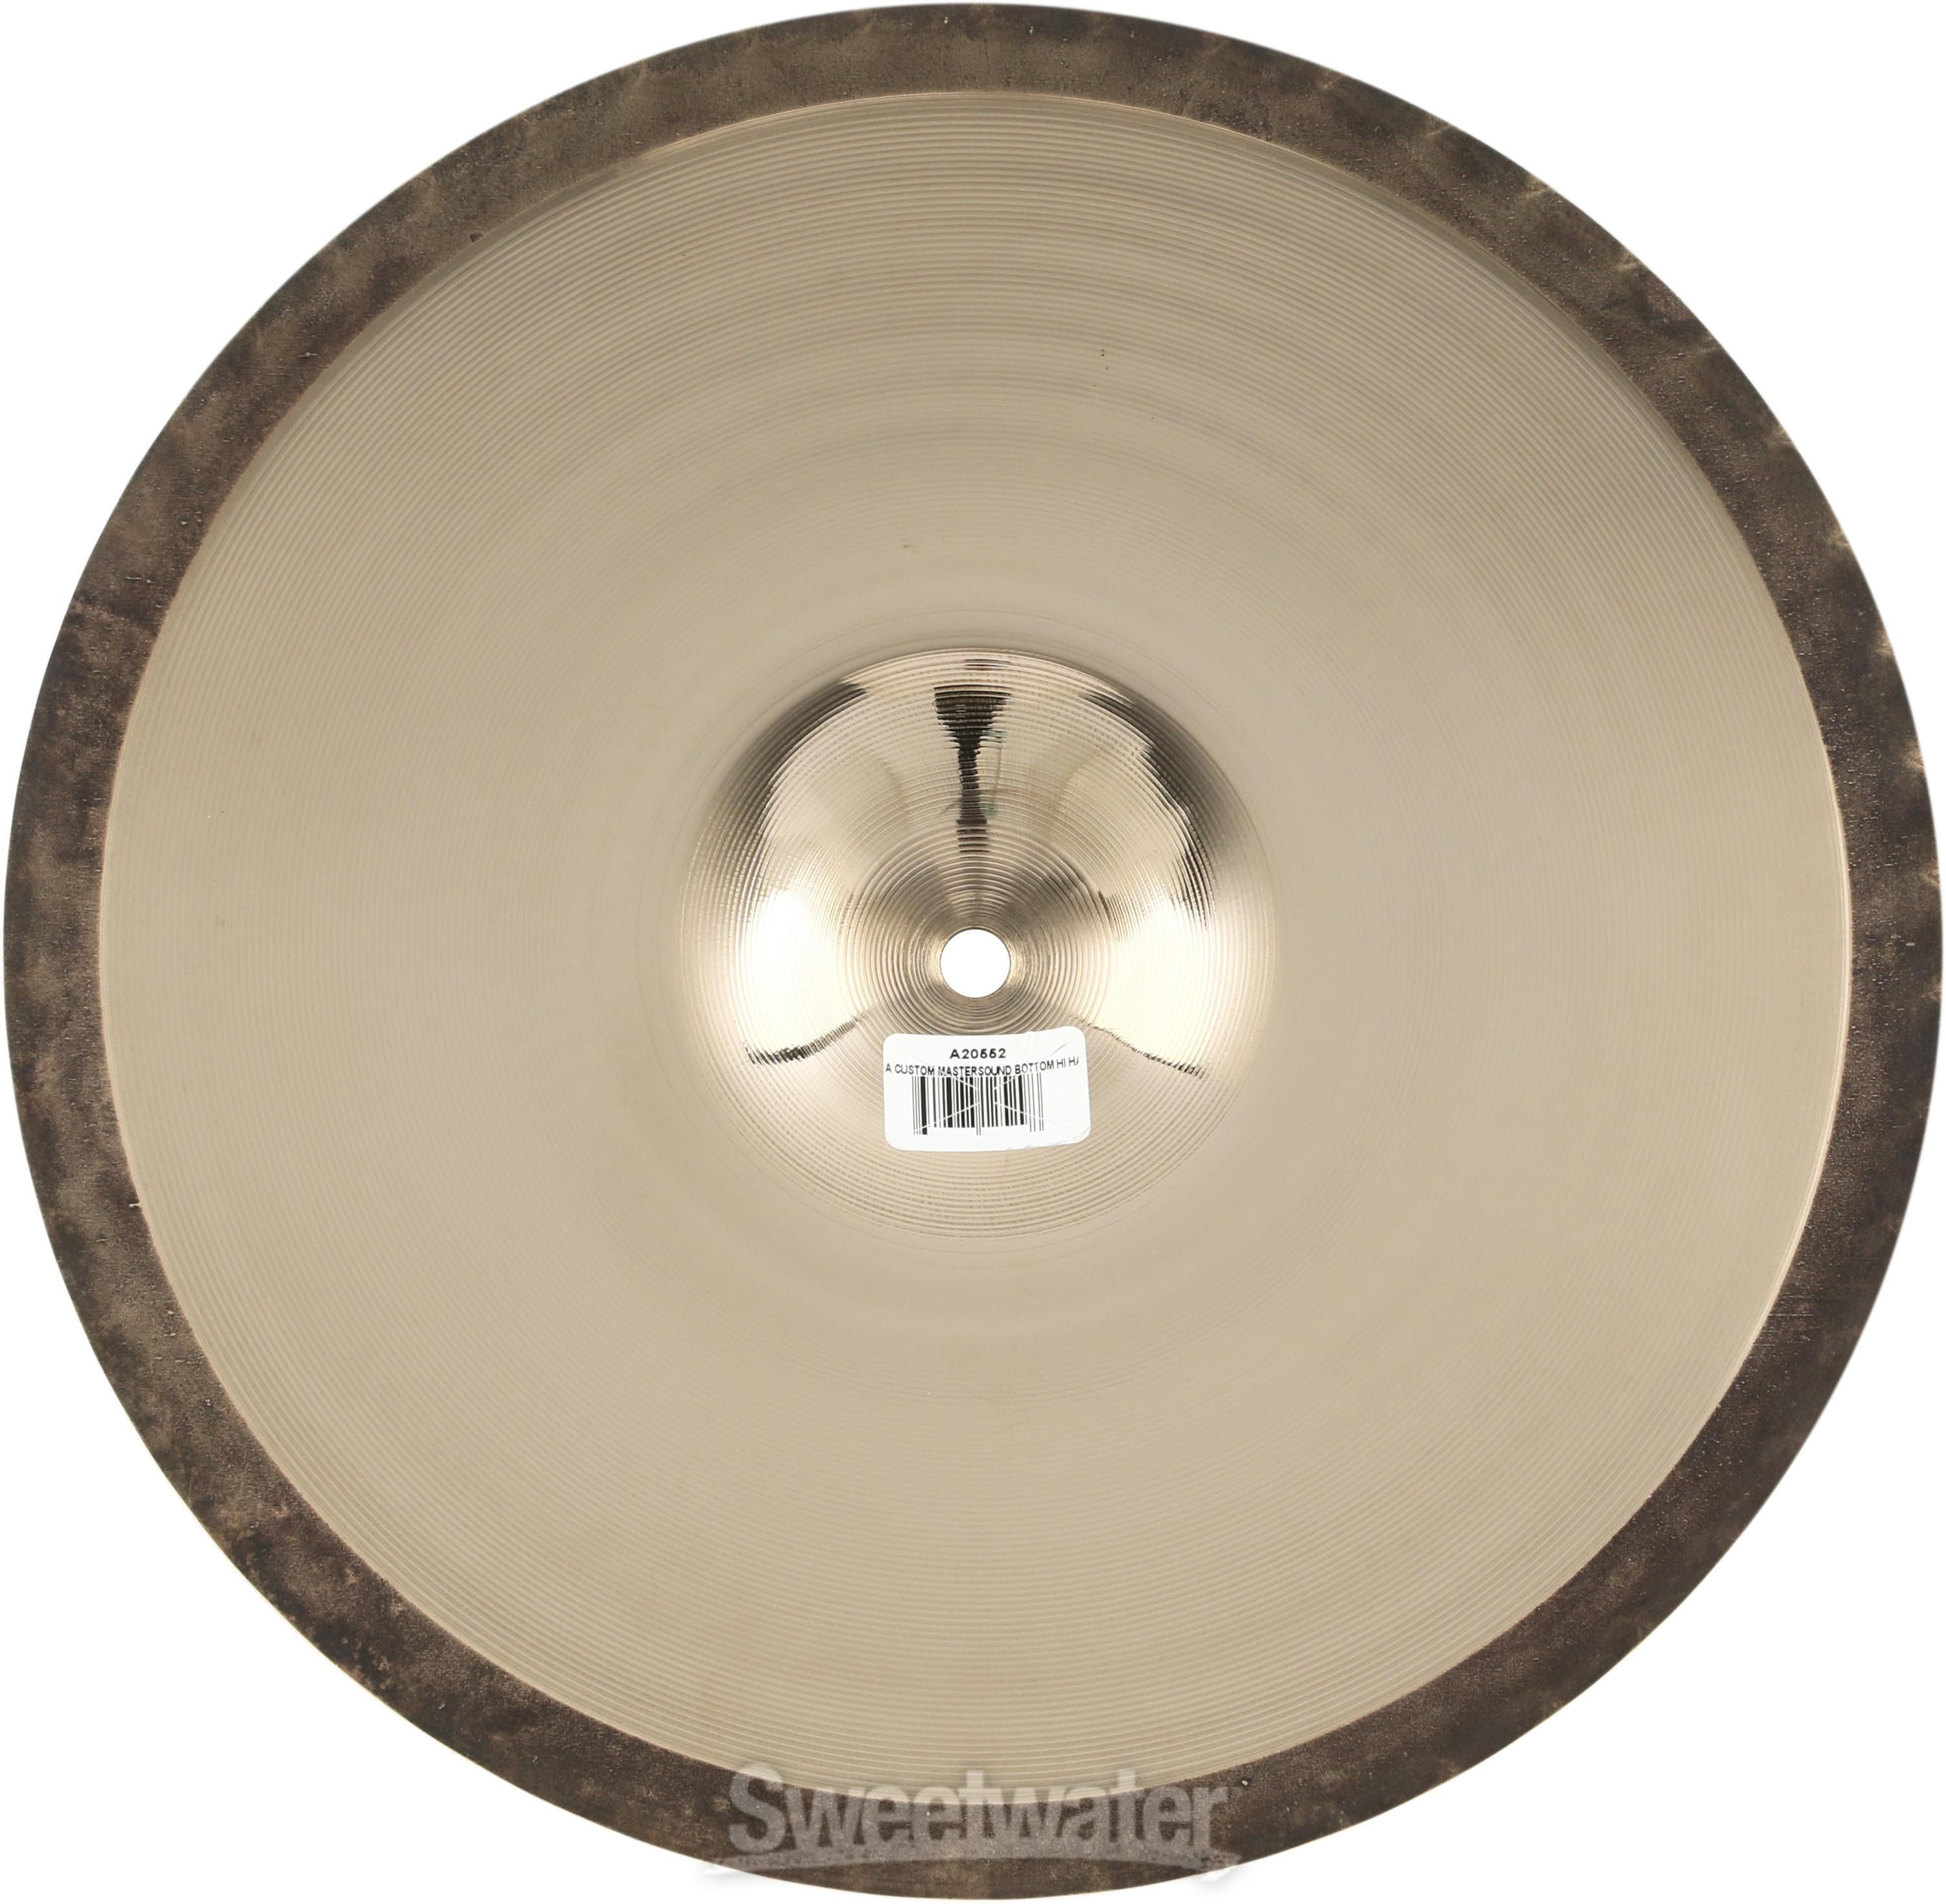 Zildjian 14 inch A Custom Mastersound Hi-hat Bottom Cymbal